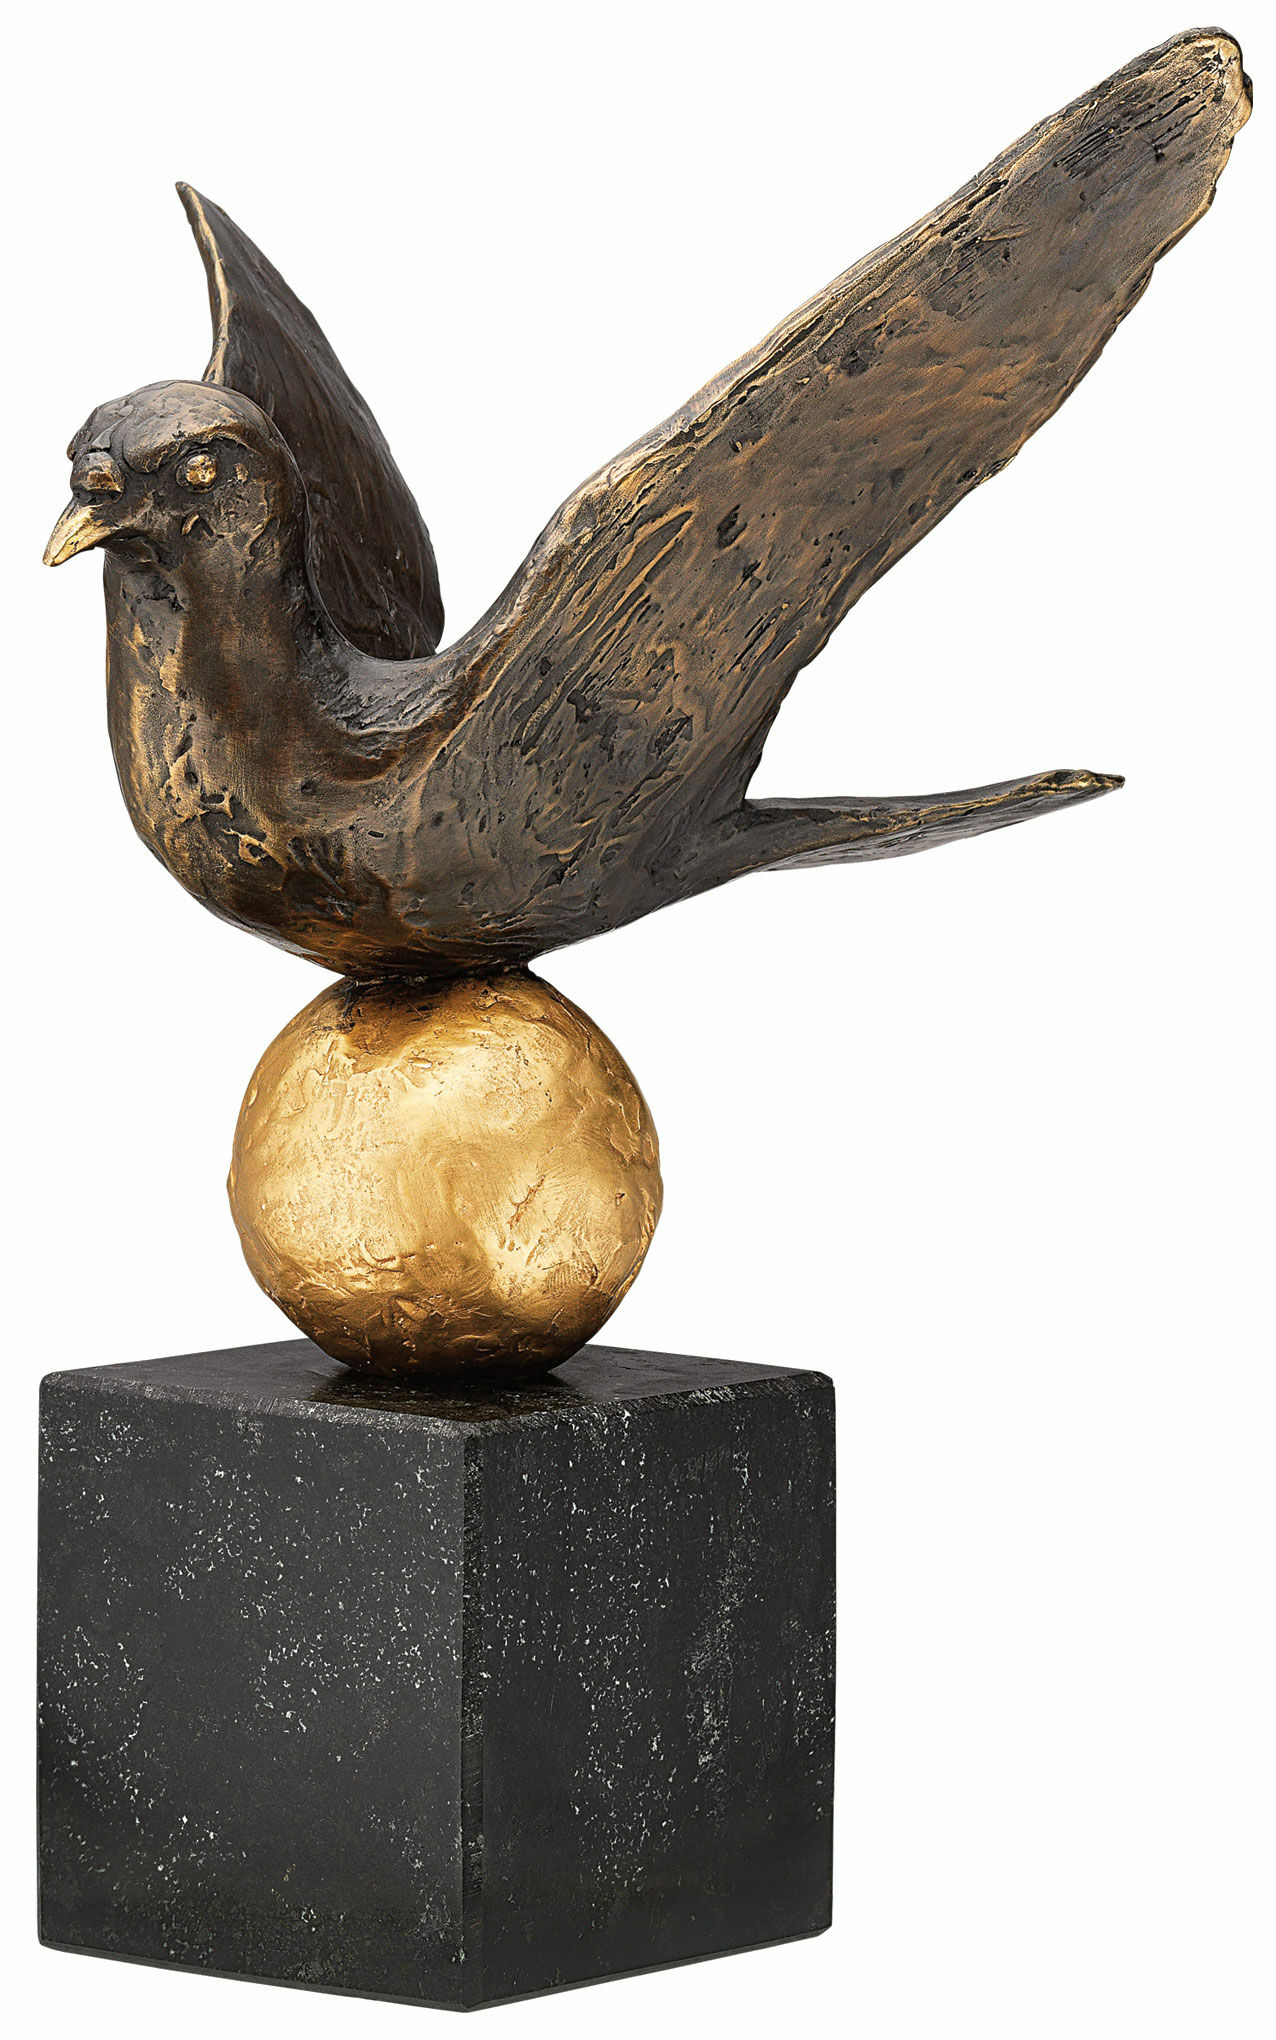 Sculpture "Dove of Peace", bronze by Kurt Arentz